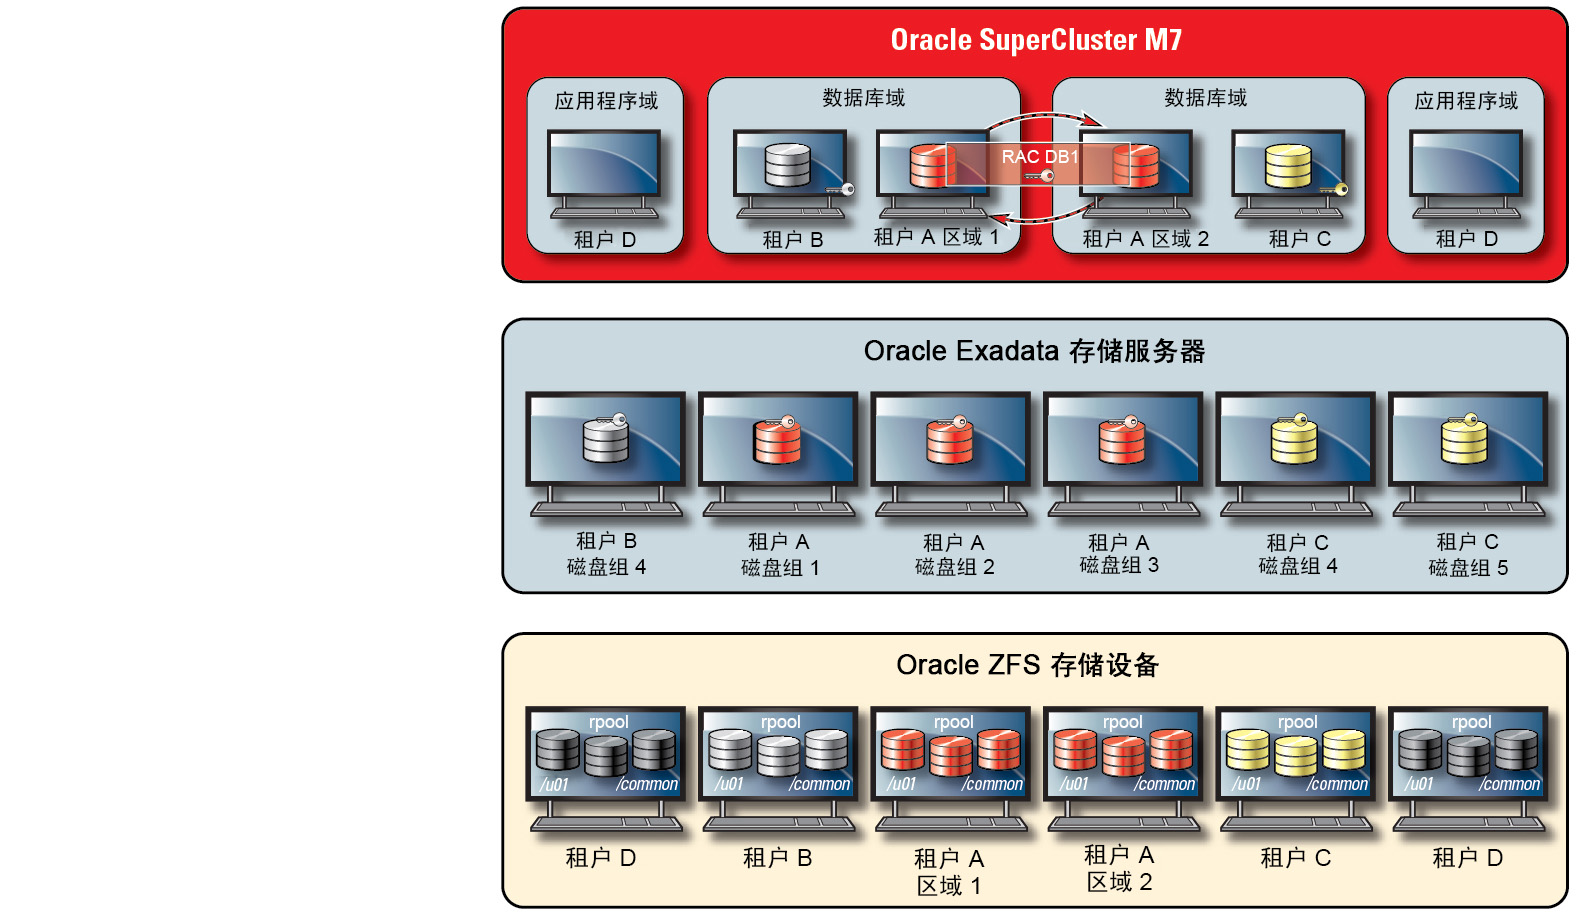 image:图中显示了 Oracle ASM 范围内的每租户安全性。